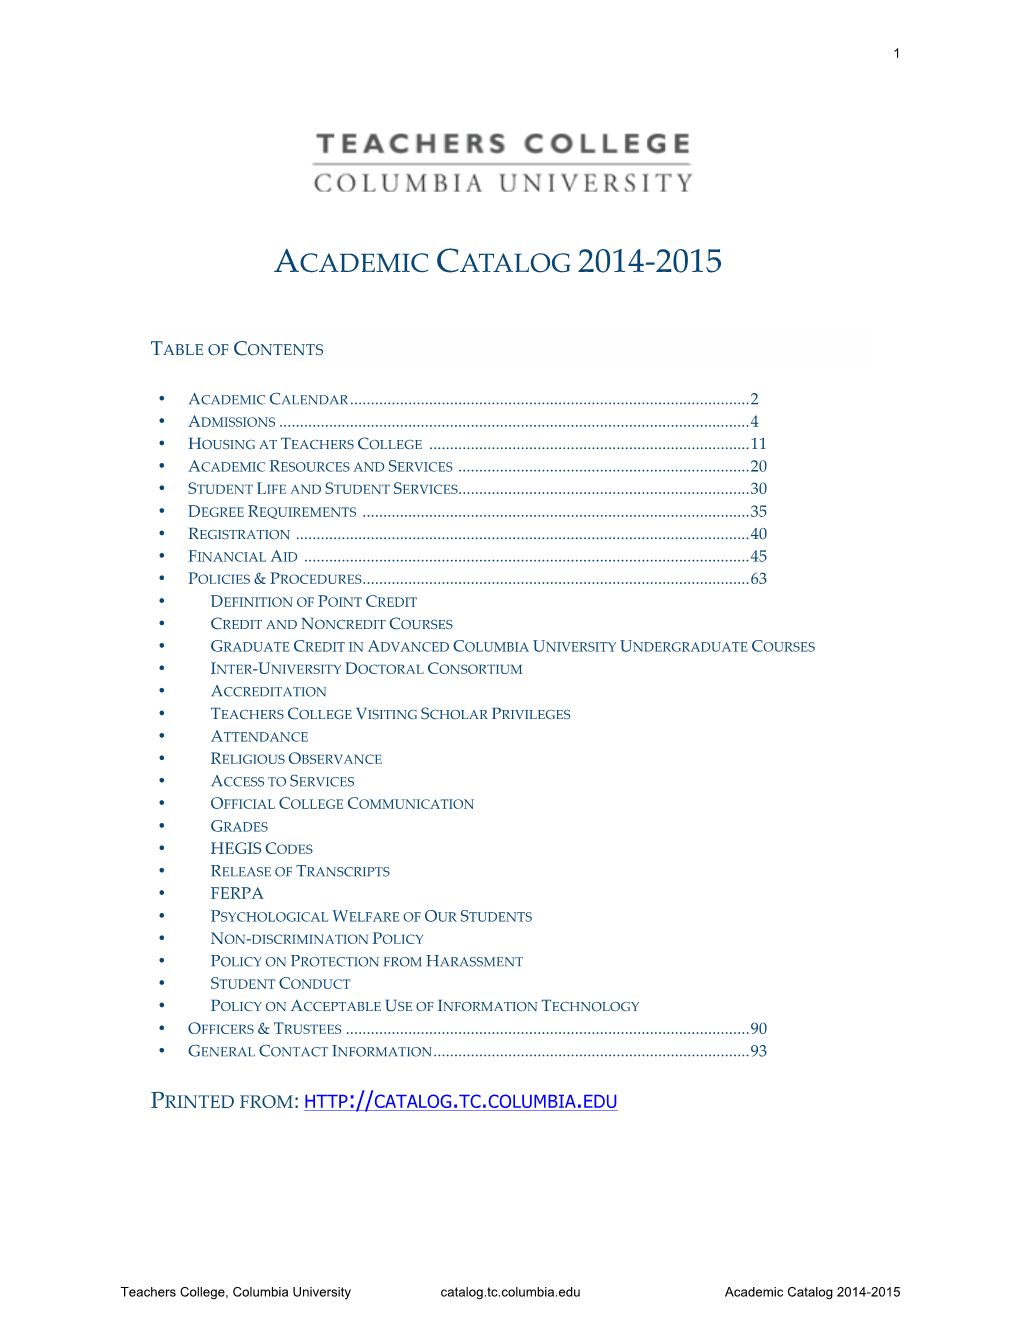 Academic Catalog 2014-2015 2